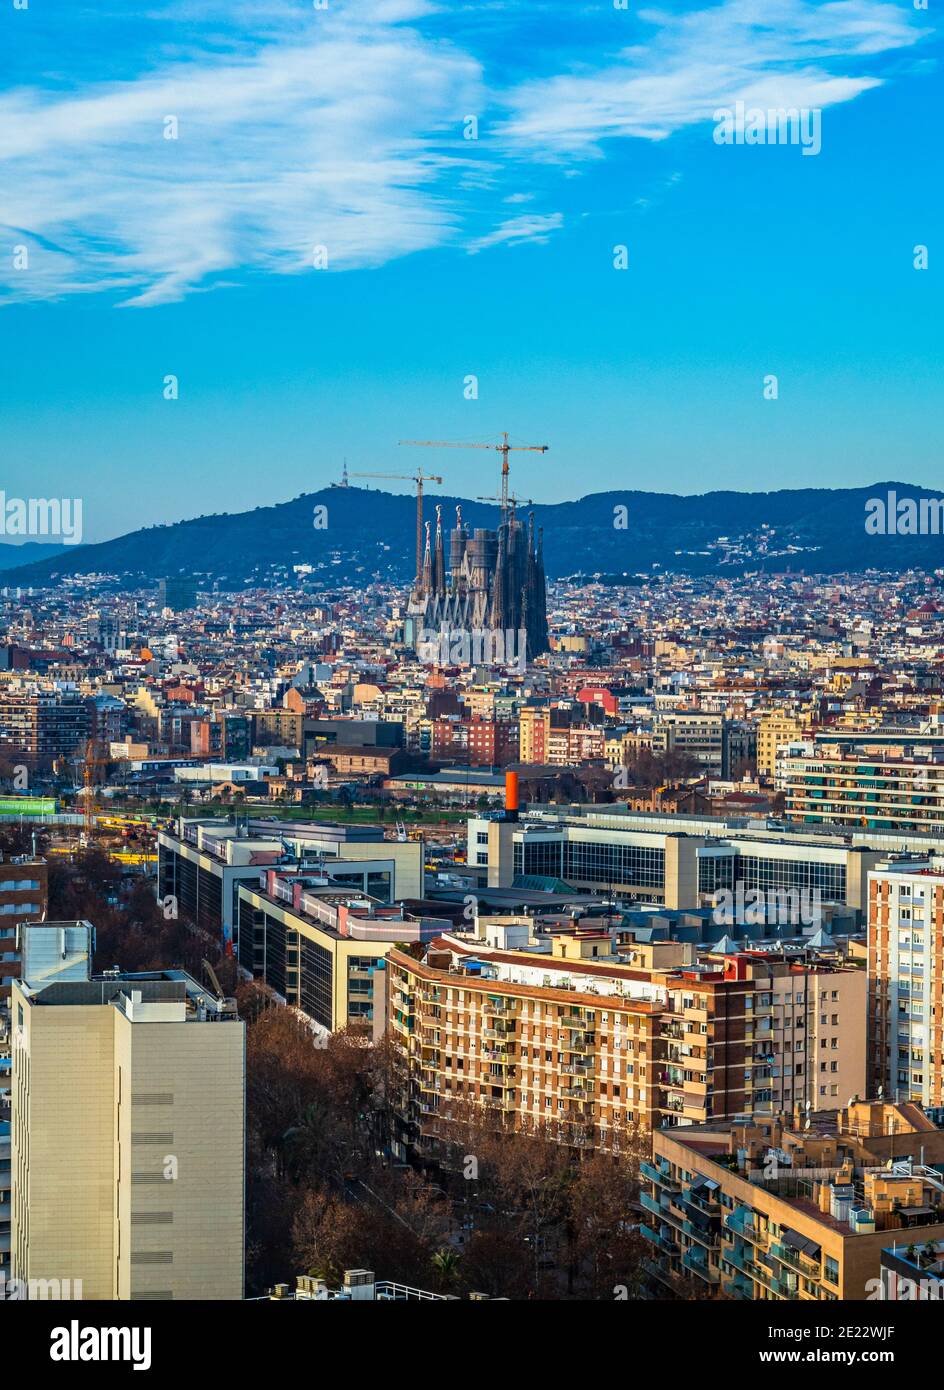 City of Barcelona cityscape with famous landmarks Torre Glories and La Sagrada Familia  towering above  - Barcelona, Catalonia, Spain Stock Photo